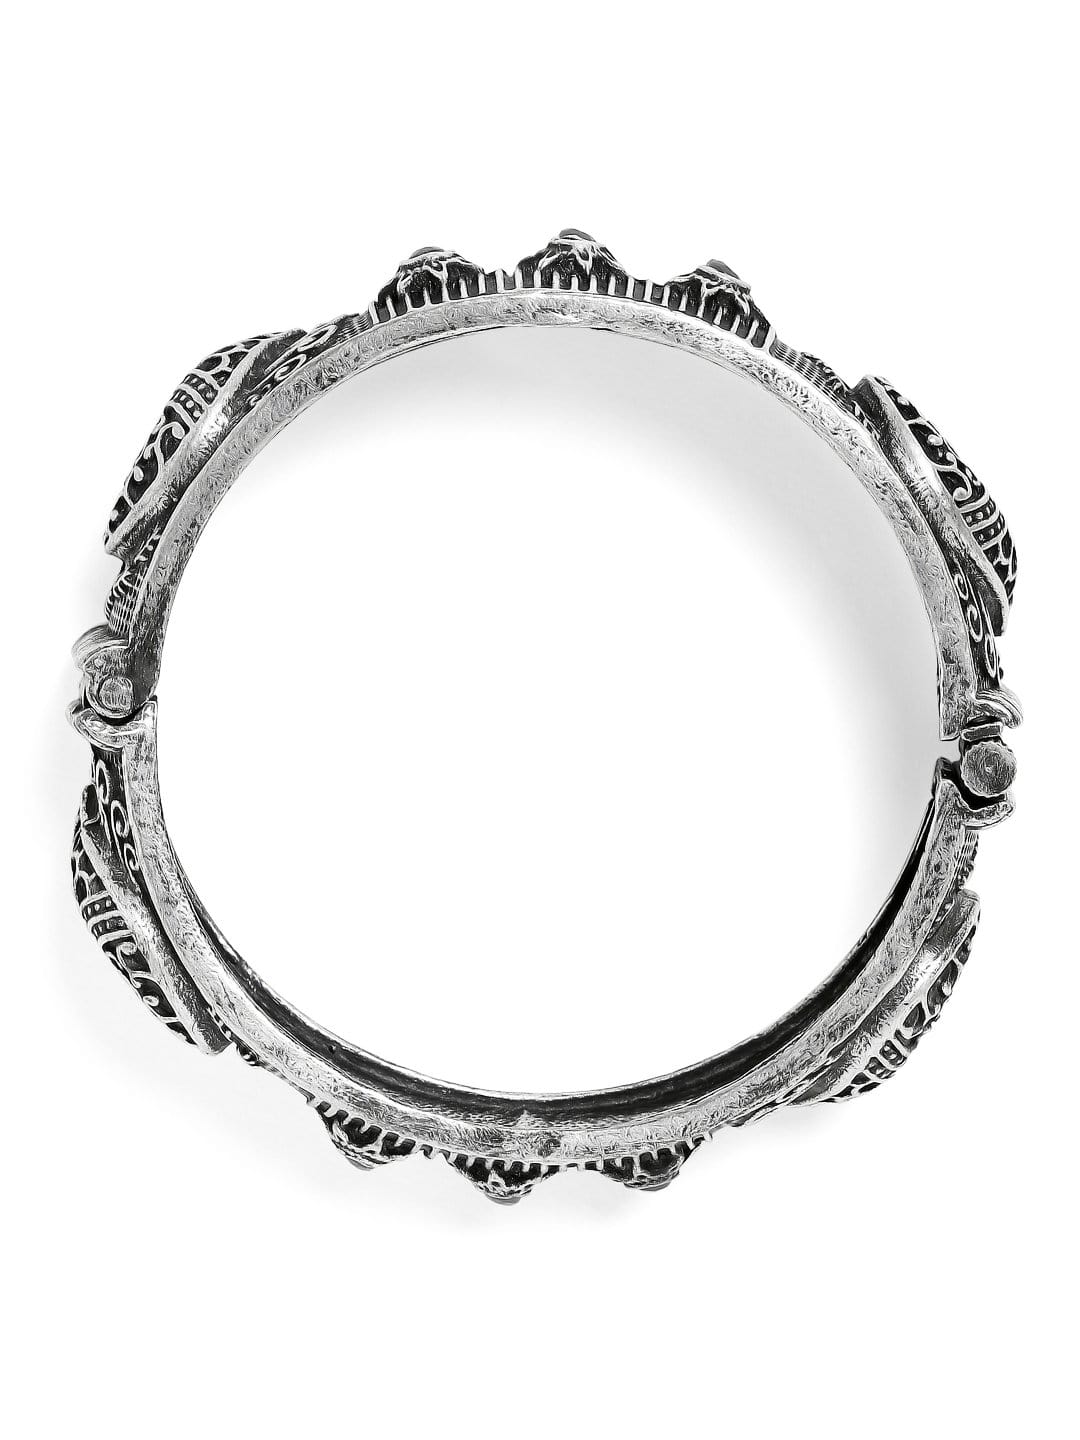 Rubans Oxidised Filigree Silver Plated Handcrafted Peacock Bracelet Bangles & Bracelets